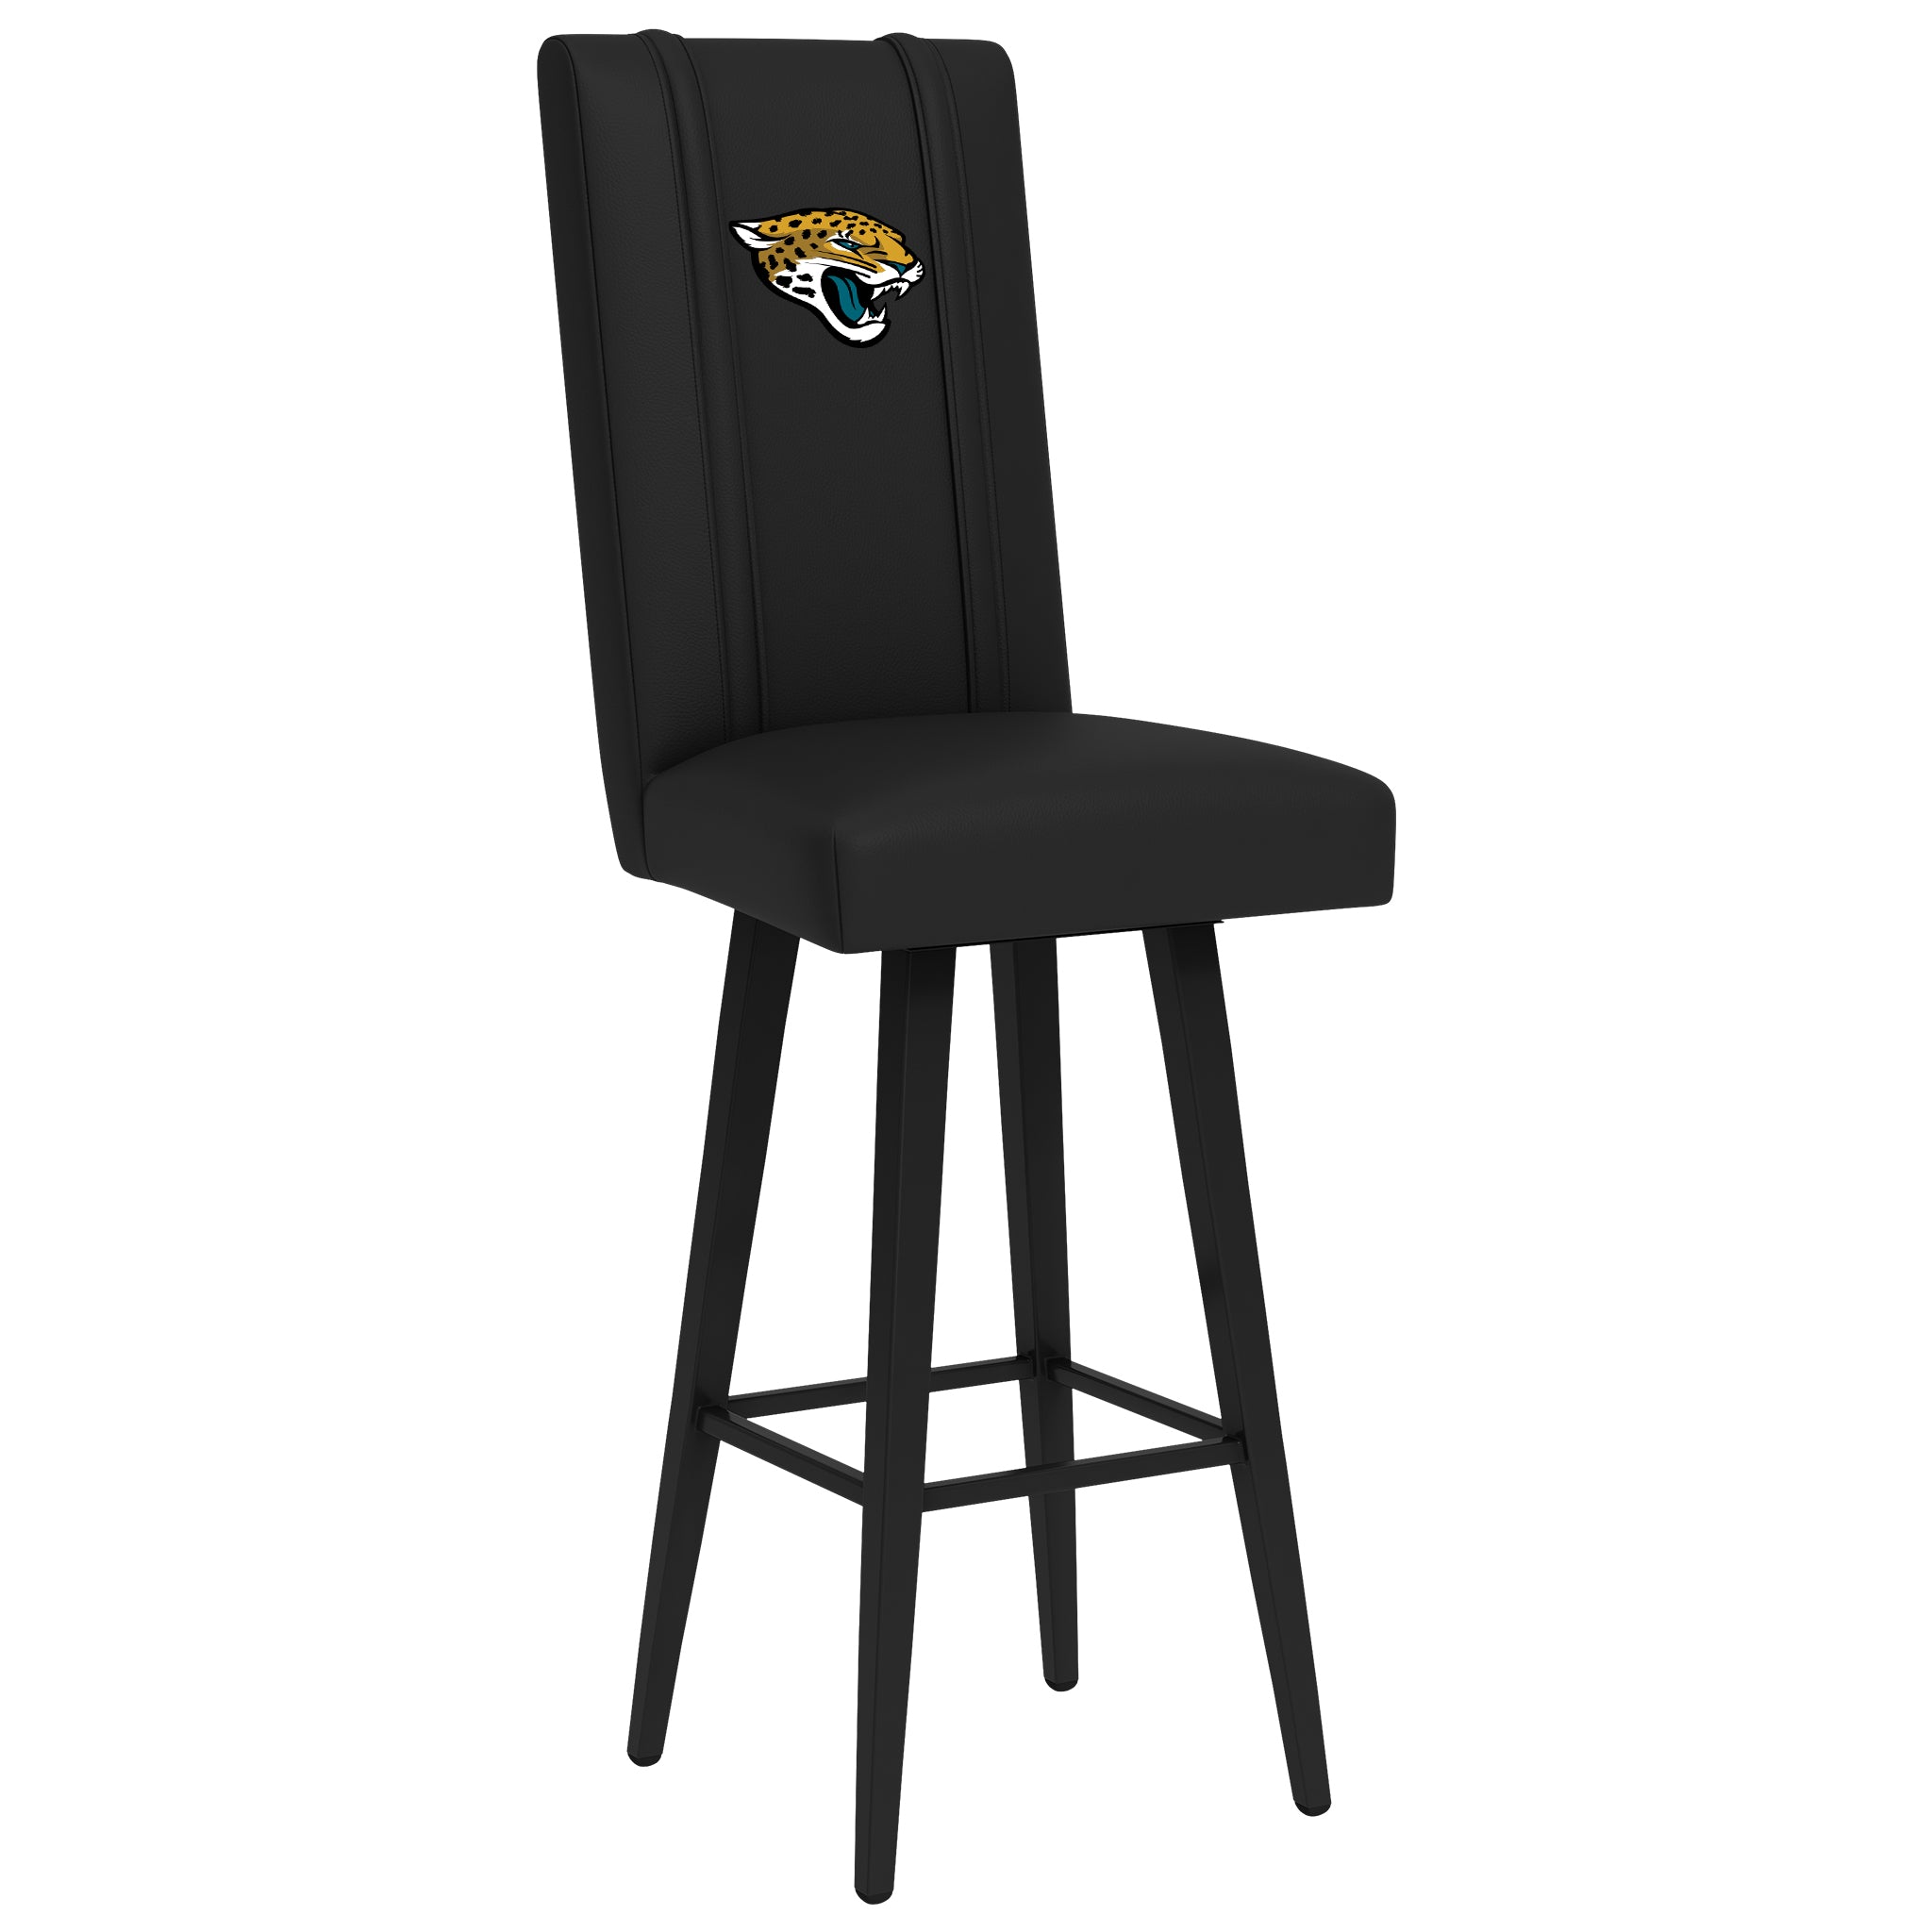 Jacksonville Jaguars Swivel Bar Stool - Chair - Furniture - Kitchen